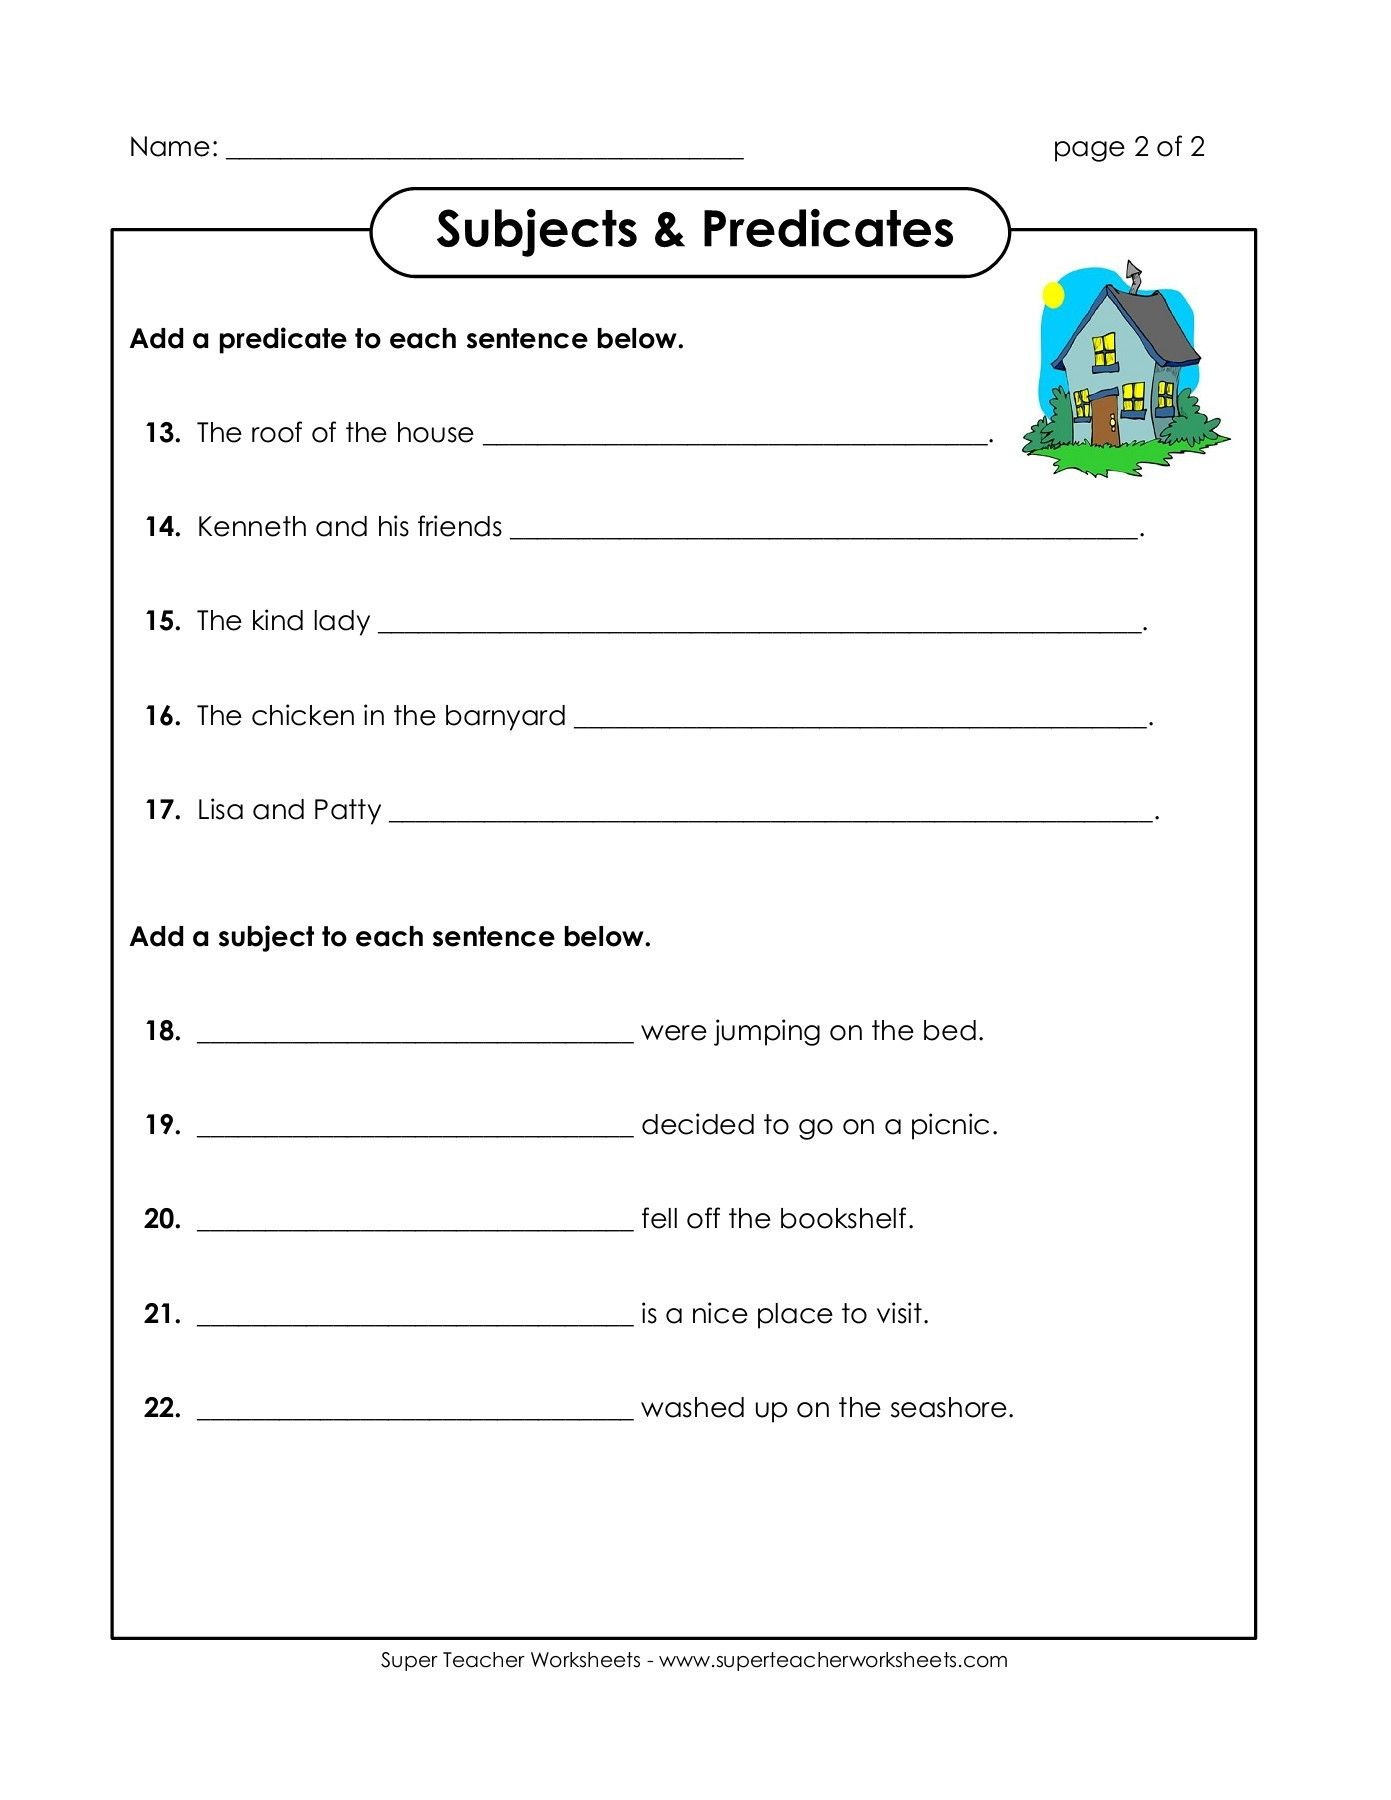 Subjects Predicates Super Teacher Worksheets Super Teacher 